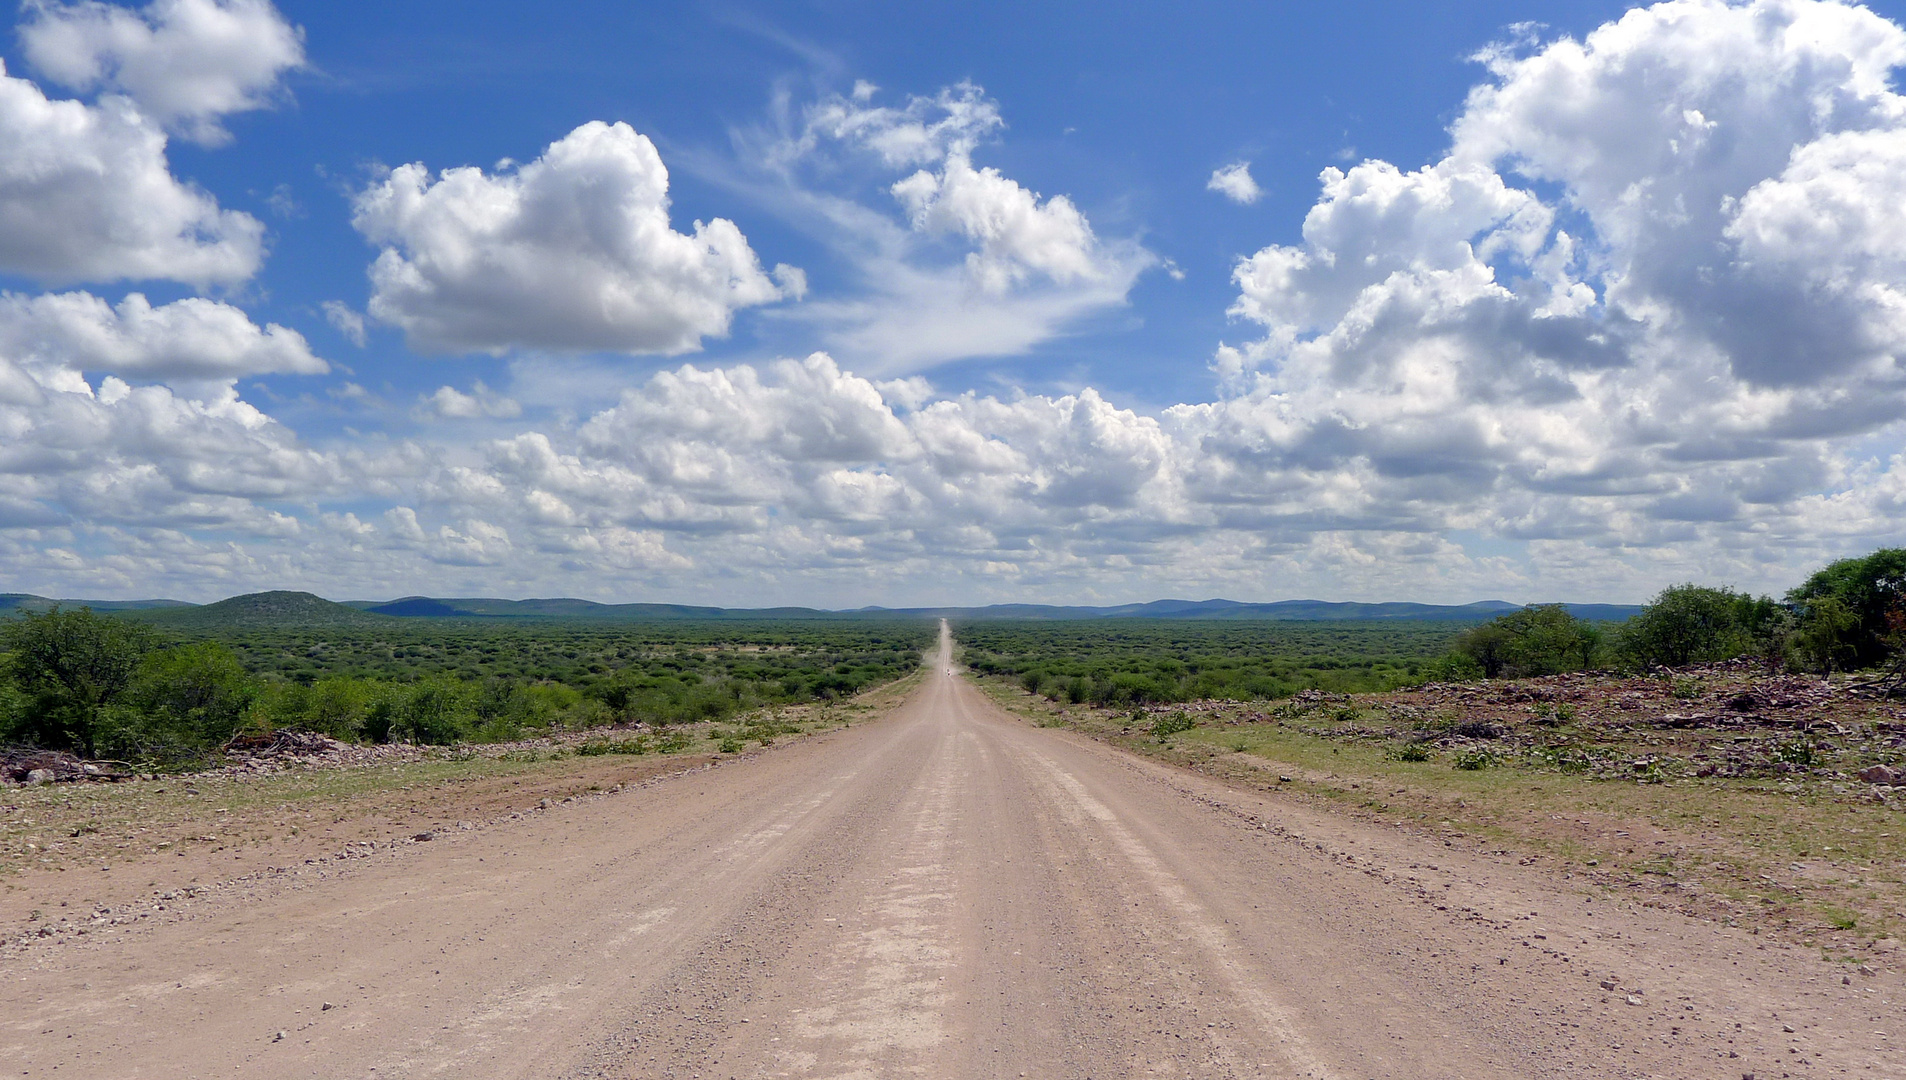 Gravel Road - Namibia